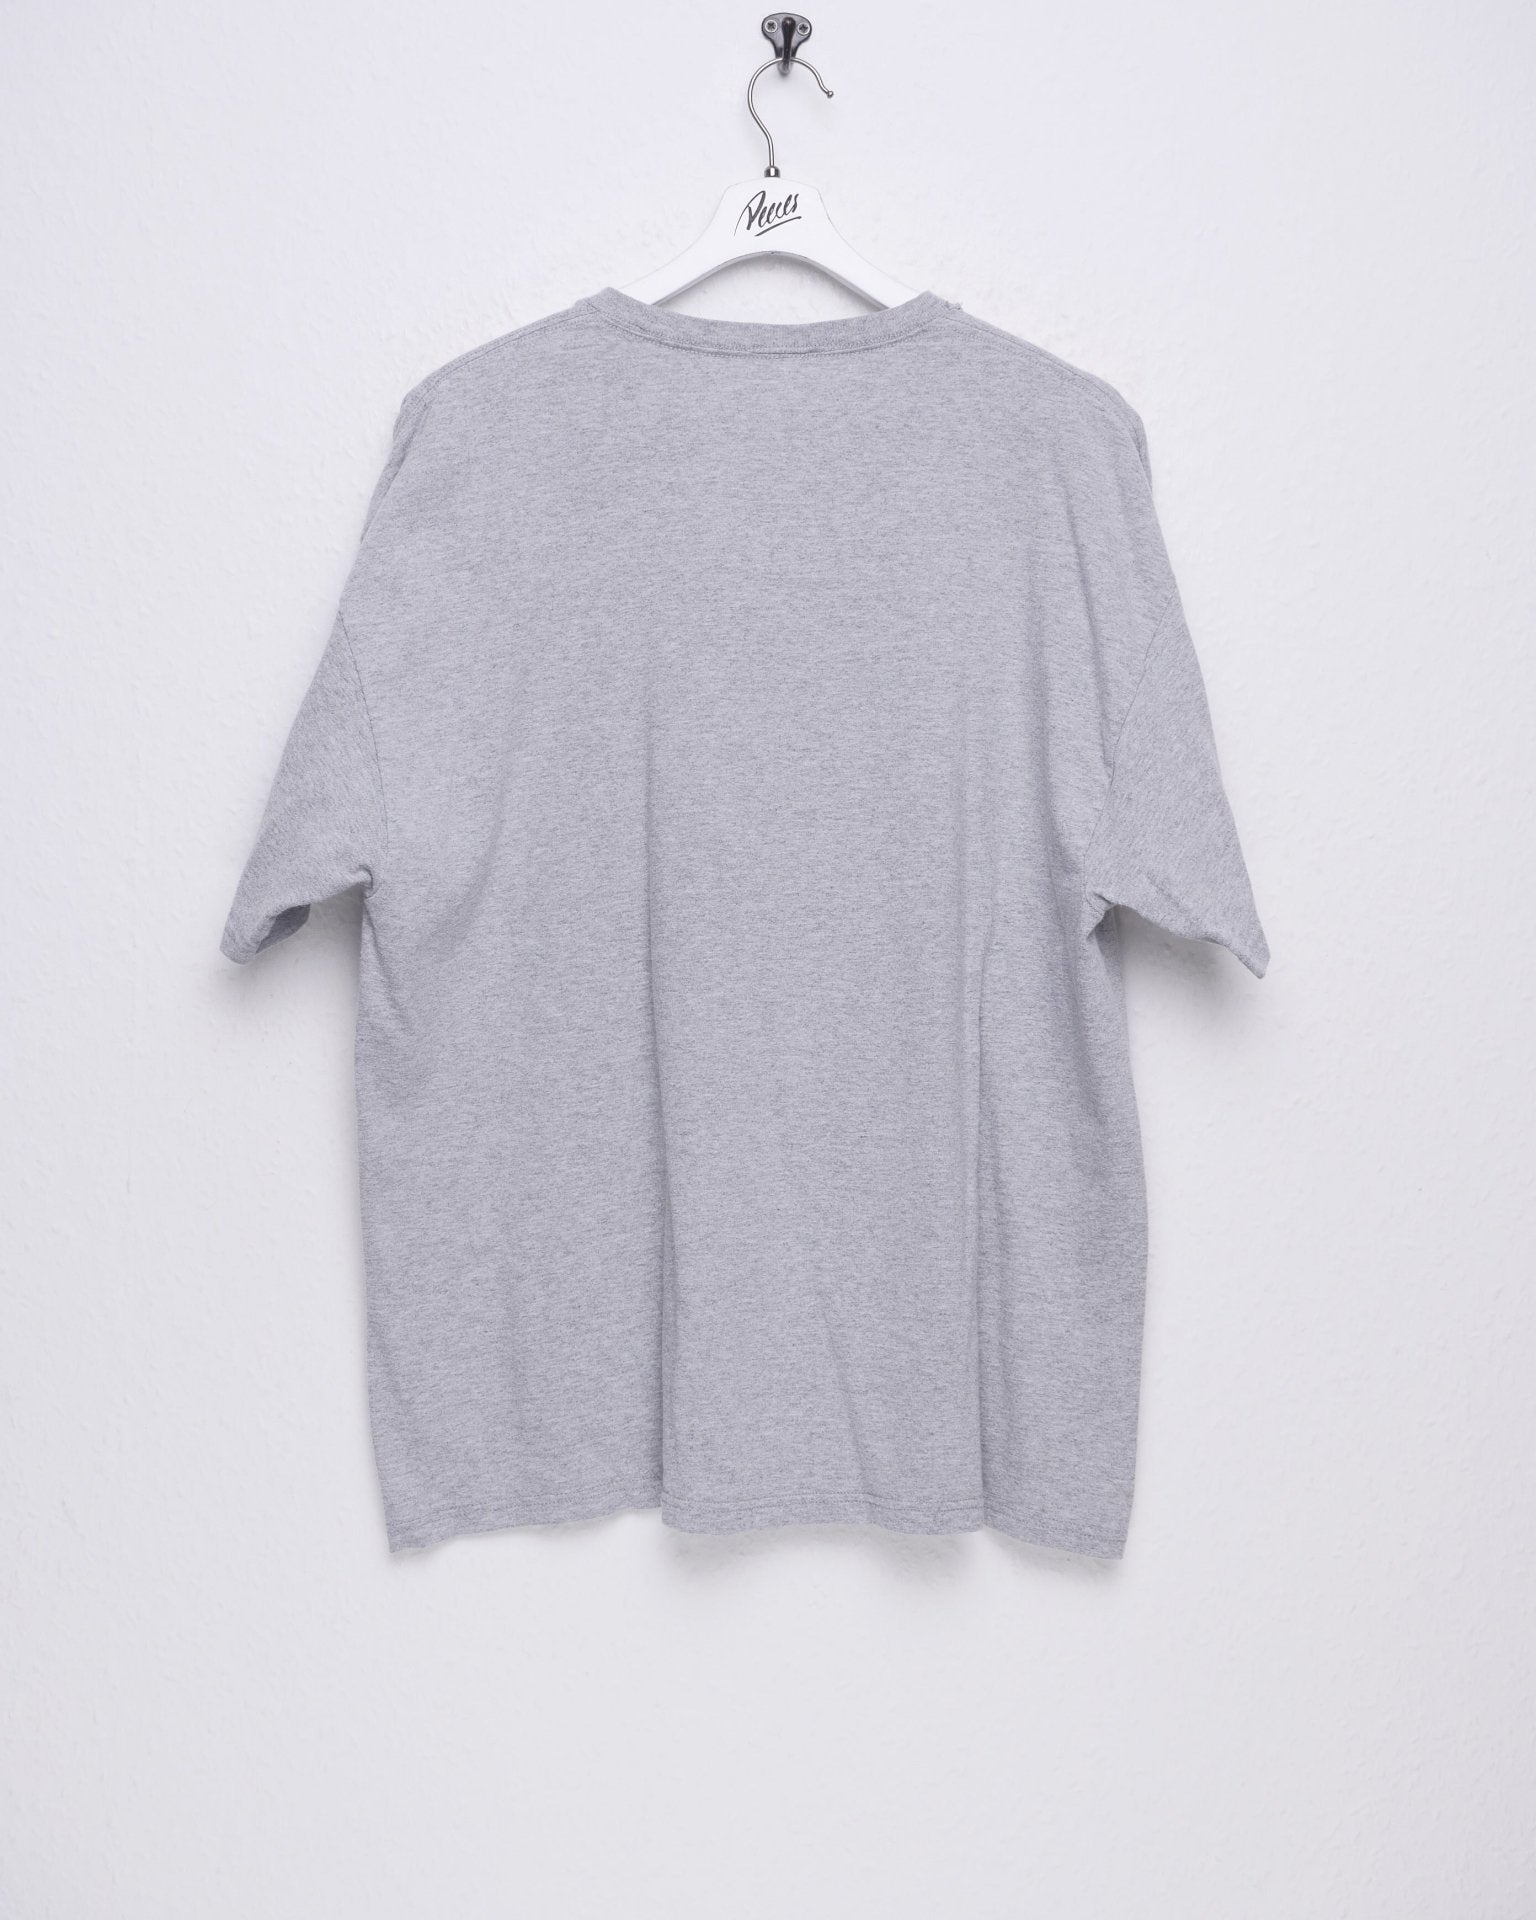 Born to Boop printed Graphic grey Shirt - Peeces